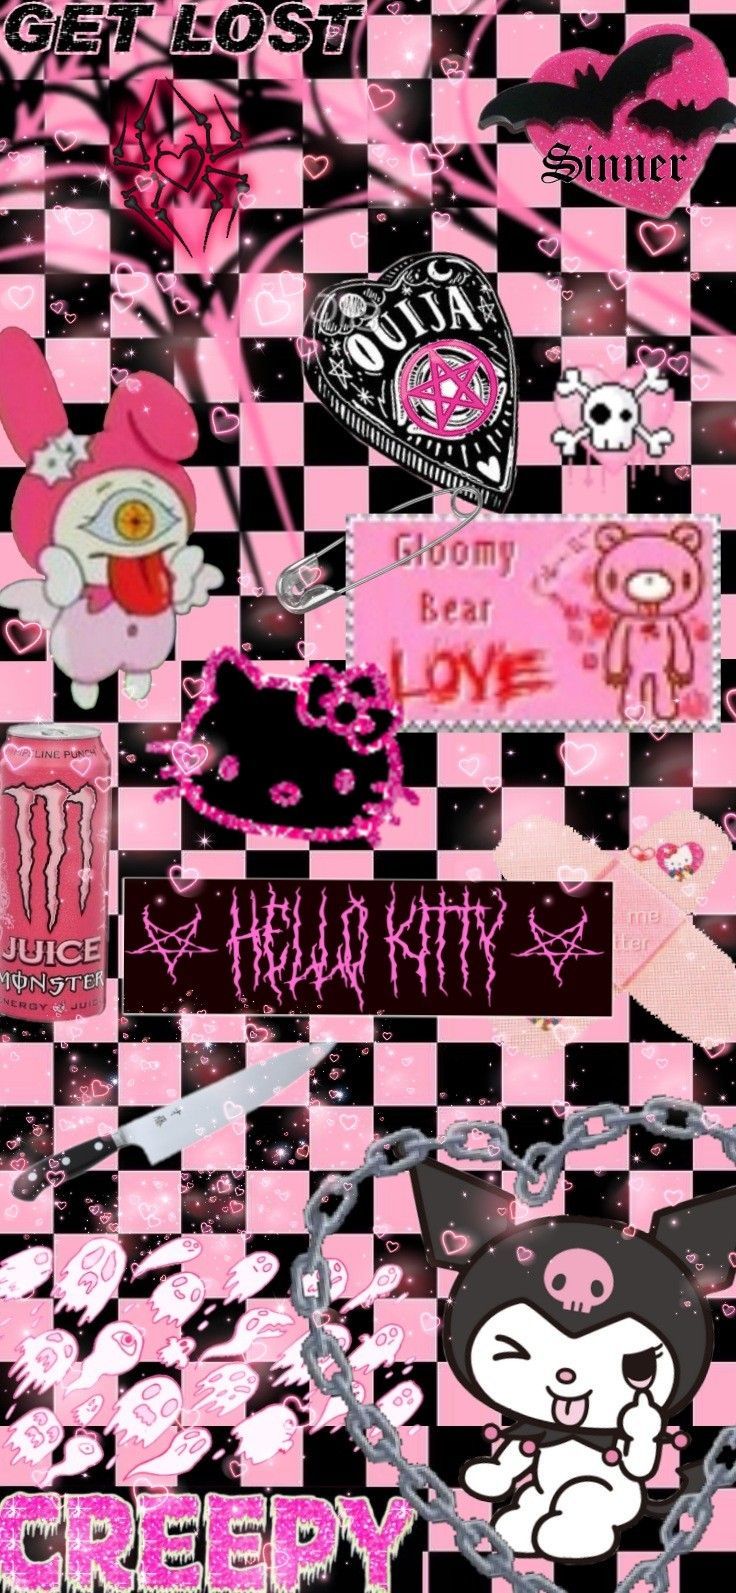 A wallpaper of the hello kitty - Creepy